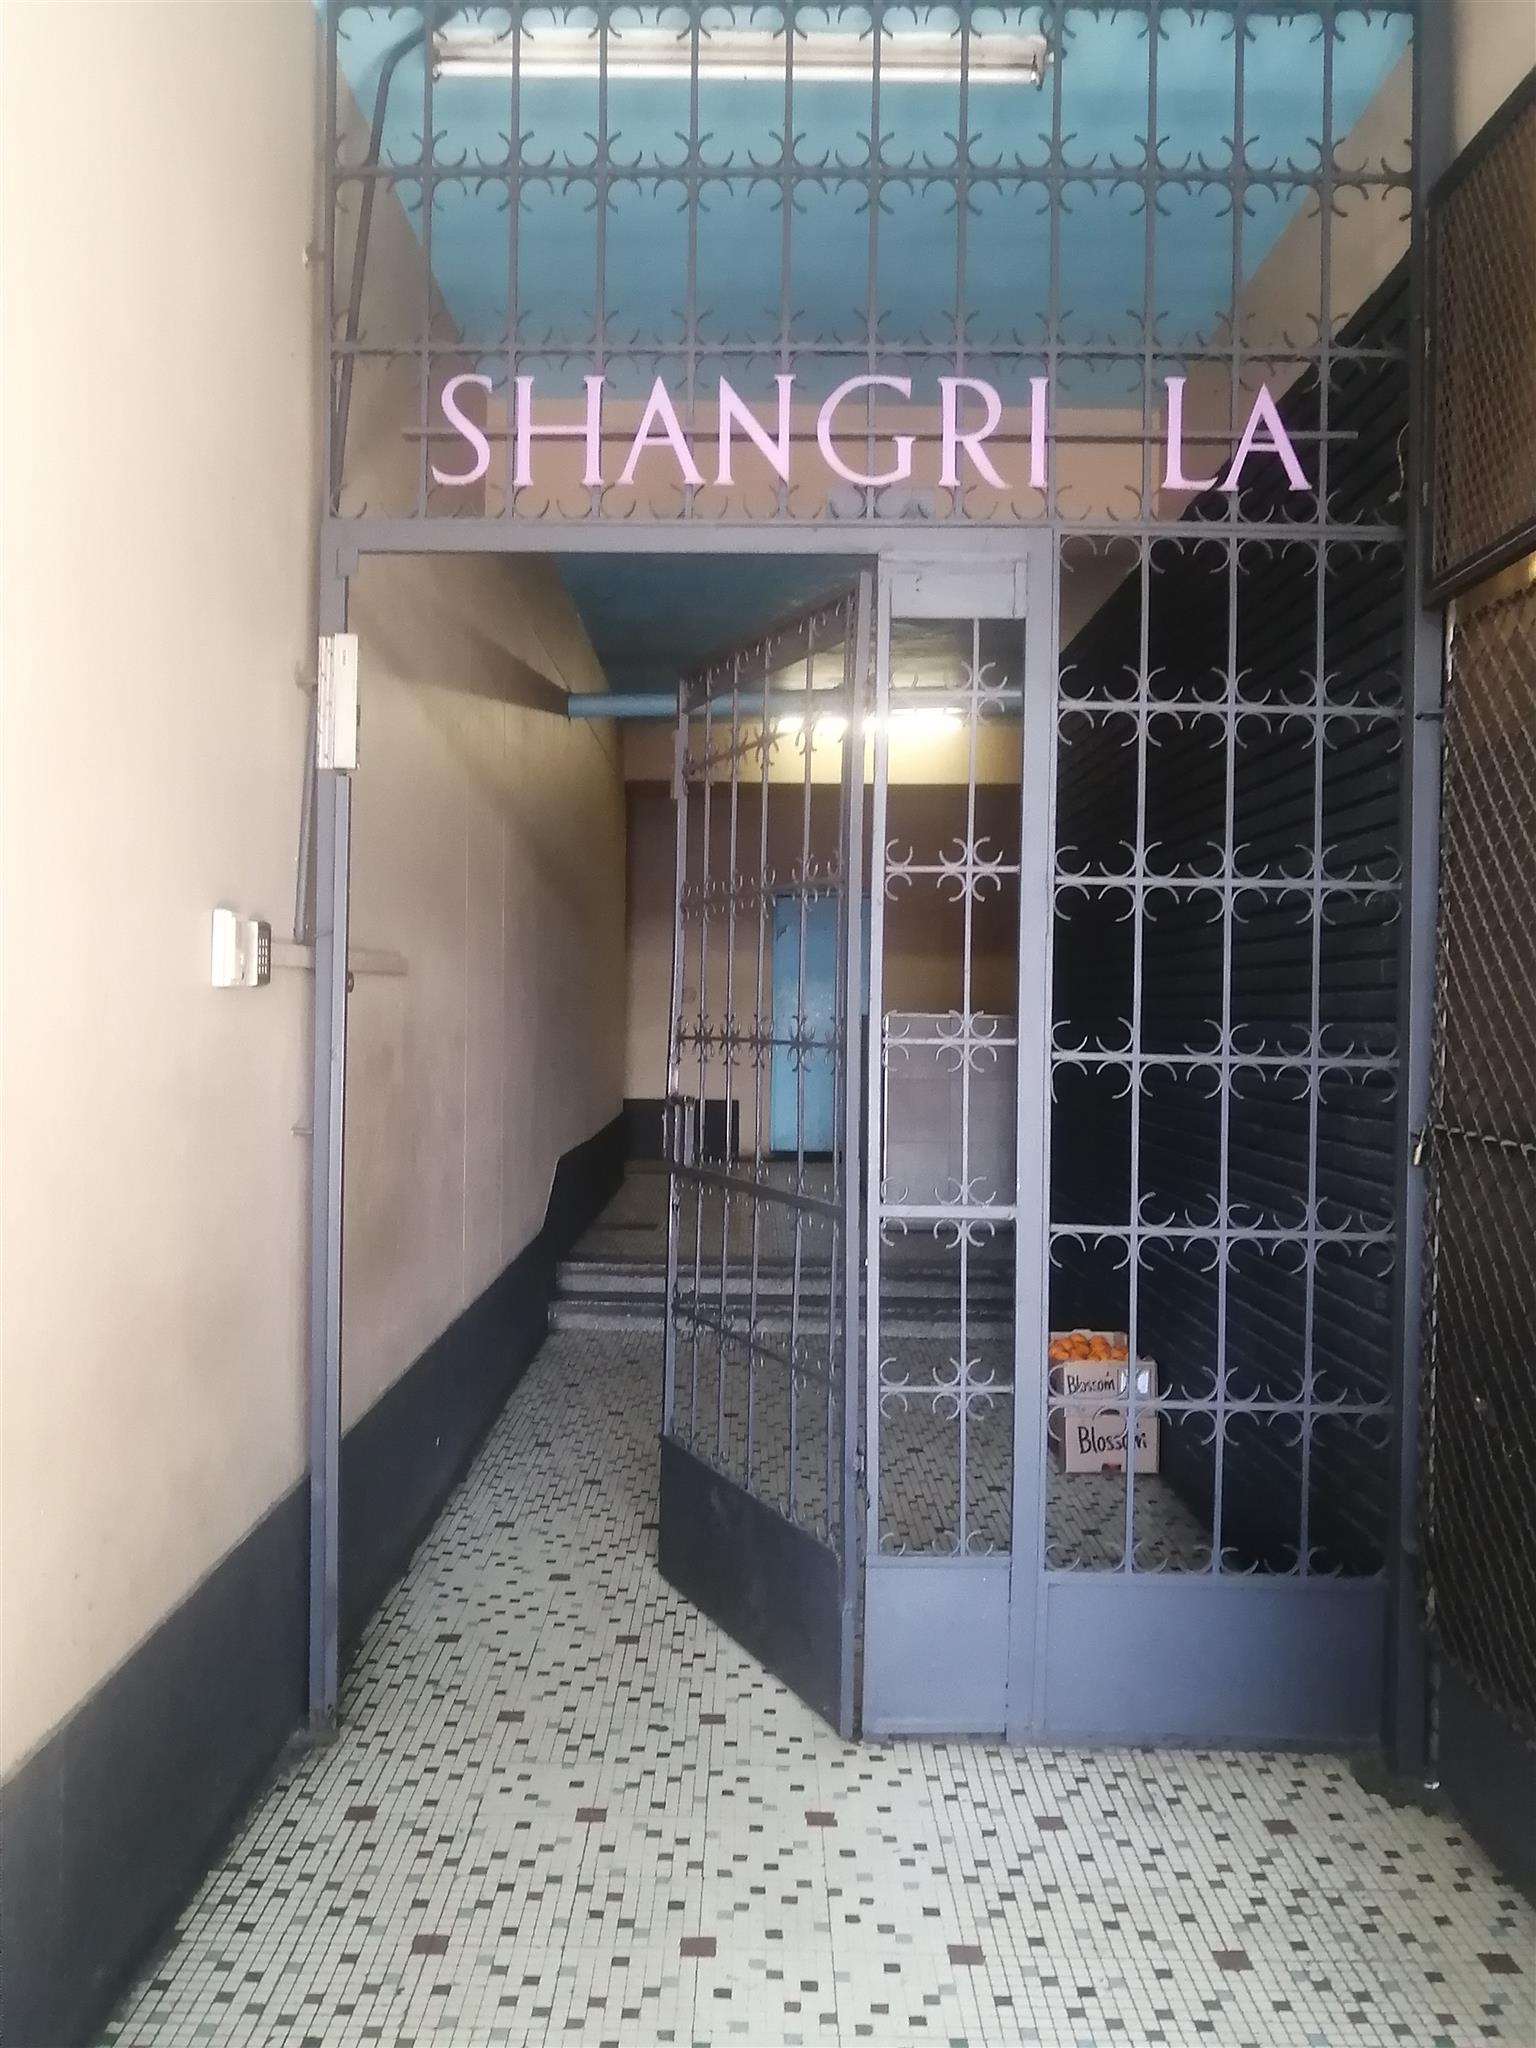  Shangri -la Court - 165 Albert street, Johannesburg